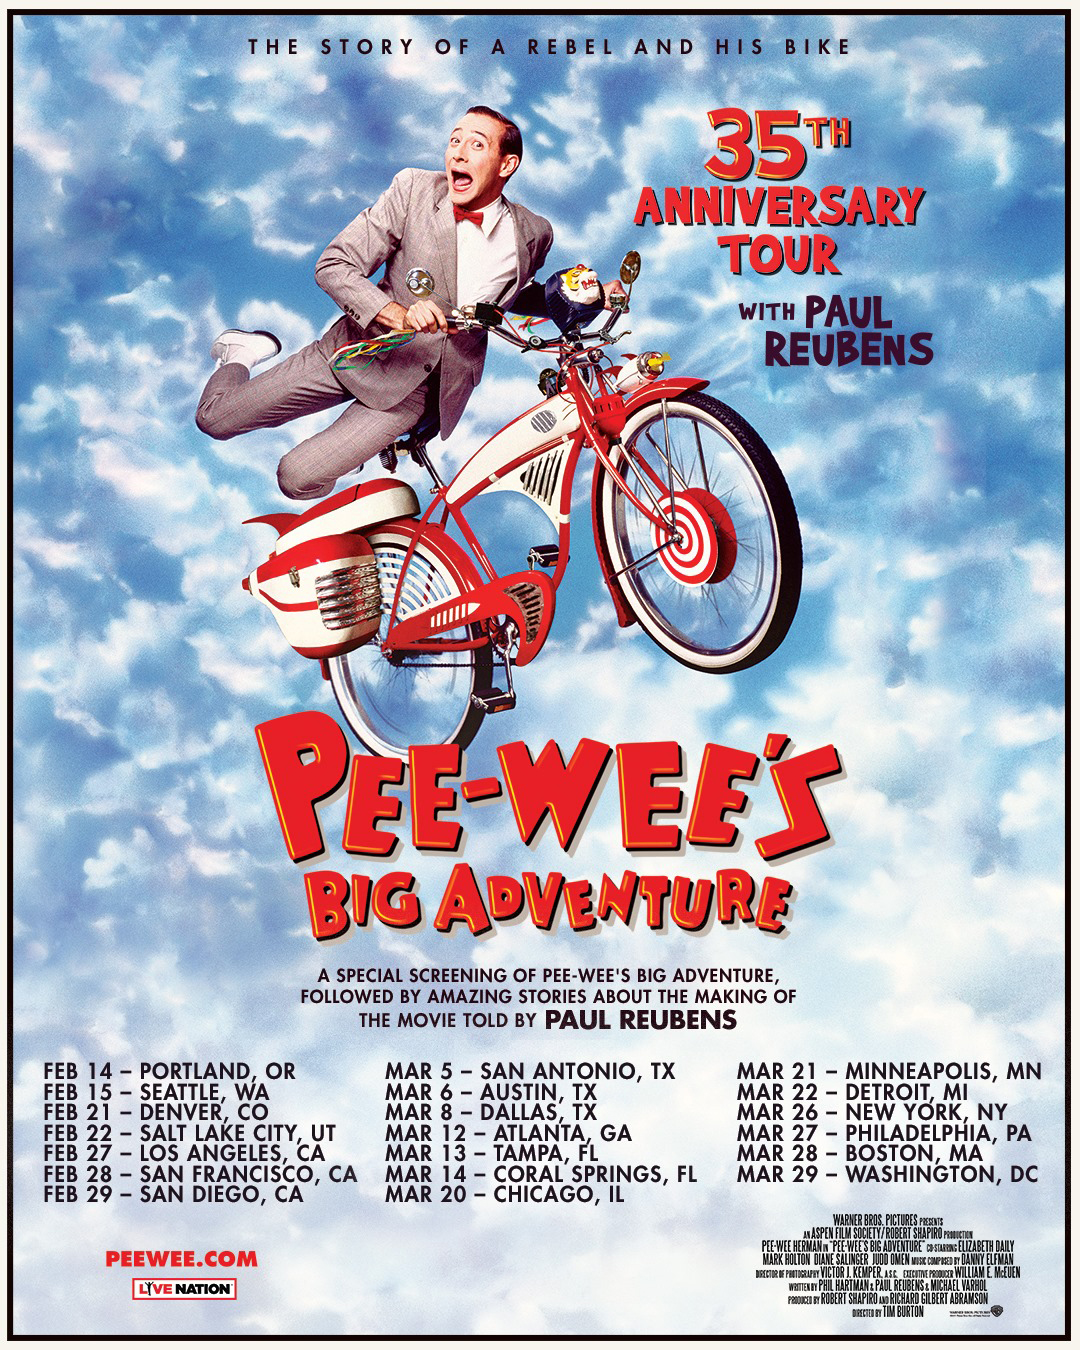 Paul Reubens to Headline U.S. Tour Celebrating 35th Anniversary of Pee-Wee's Big Adventure 35th Anniversary Tour